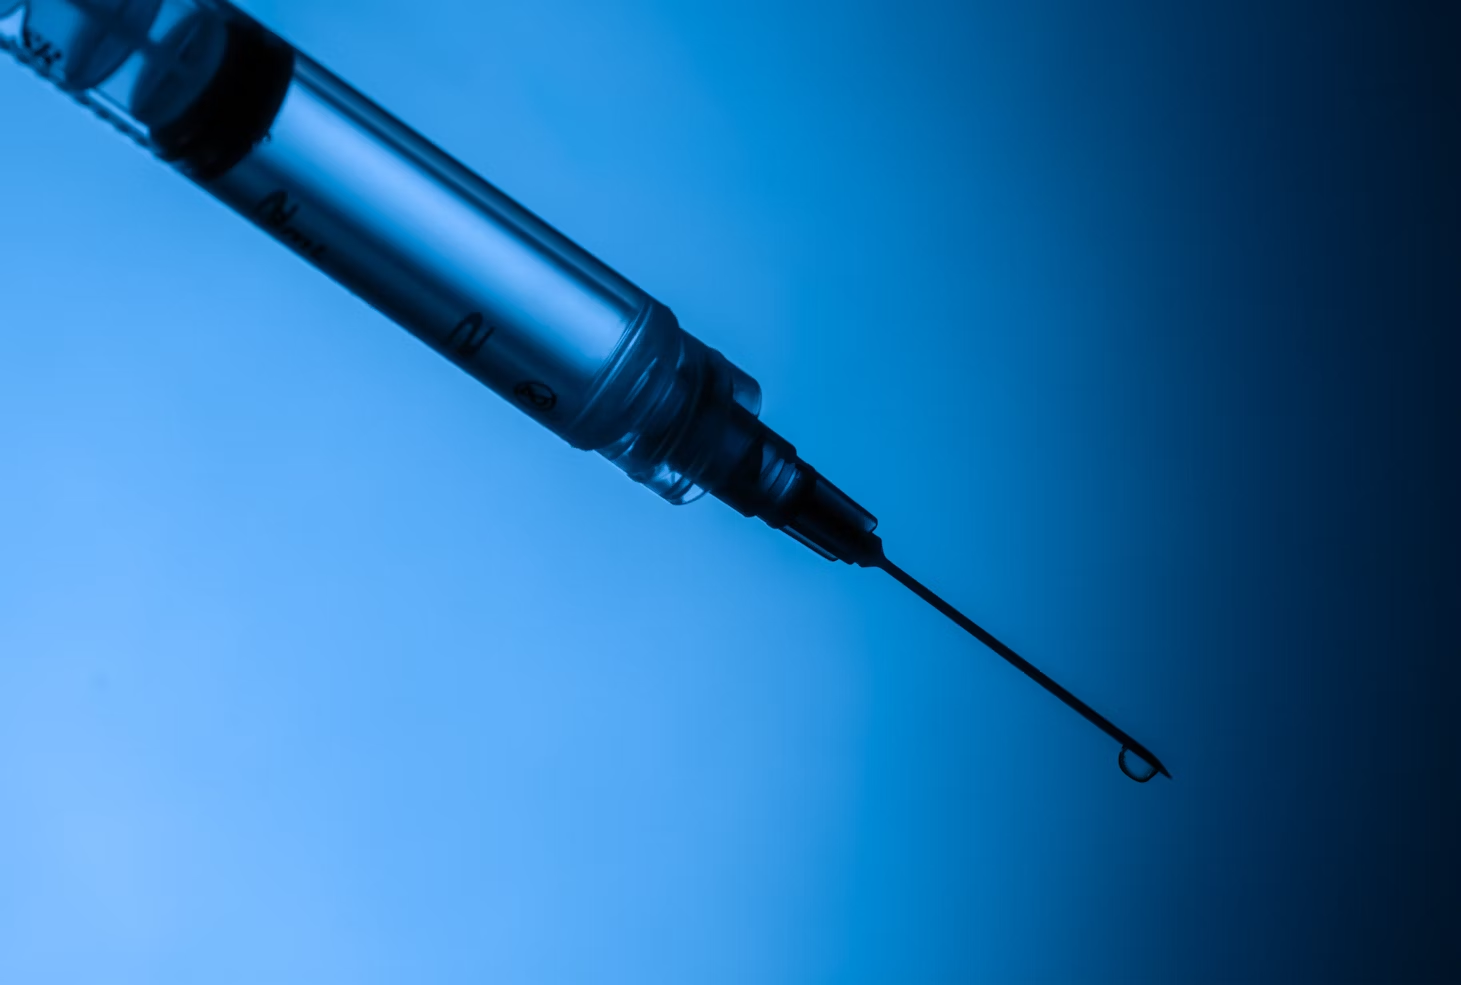 a-close-up-of-a-syringe